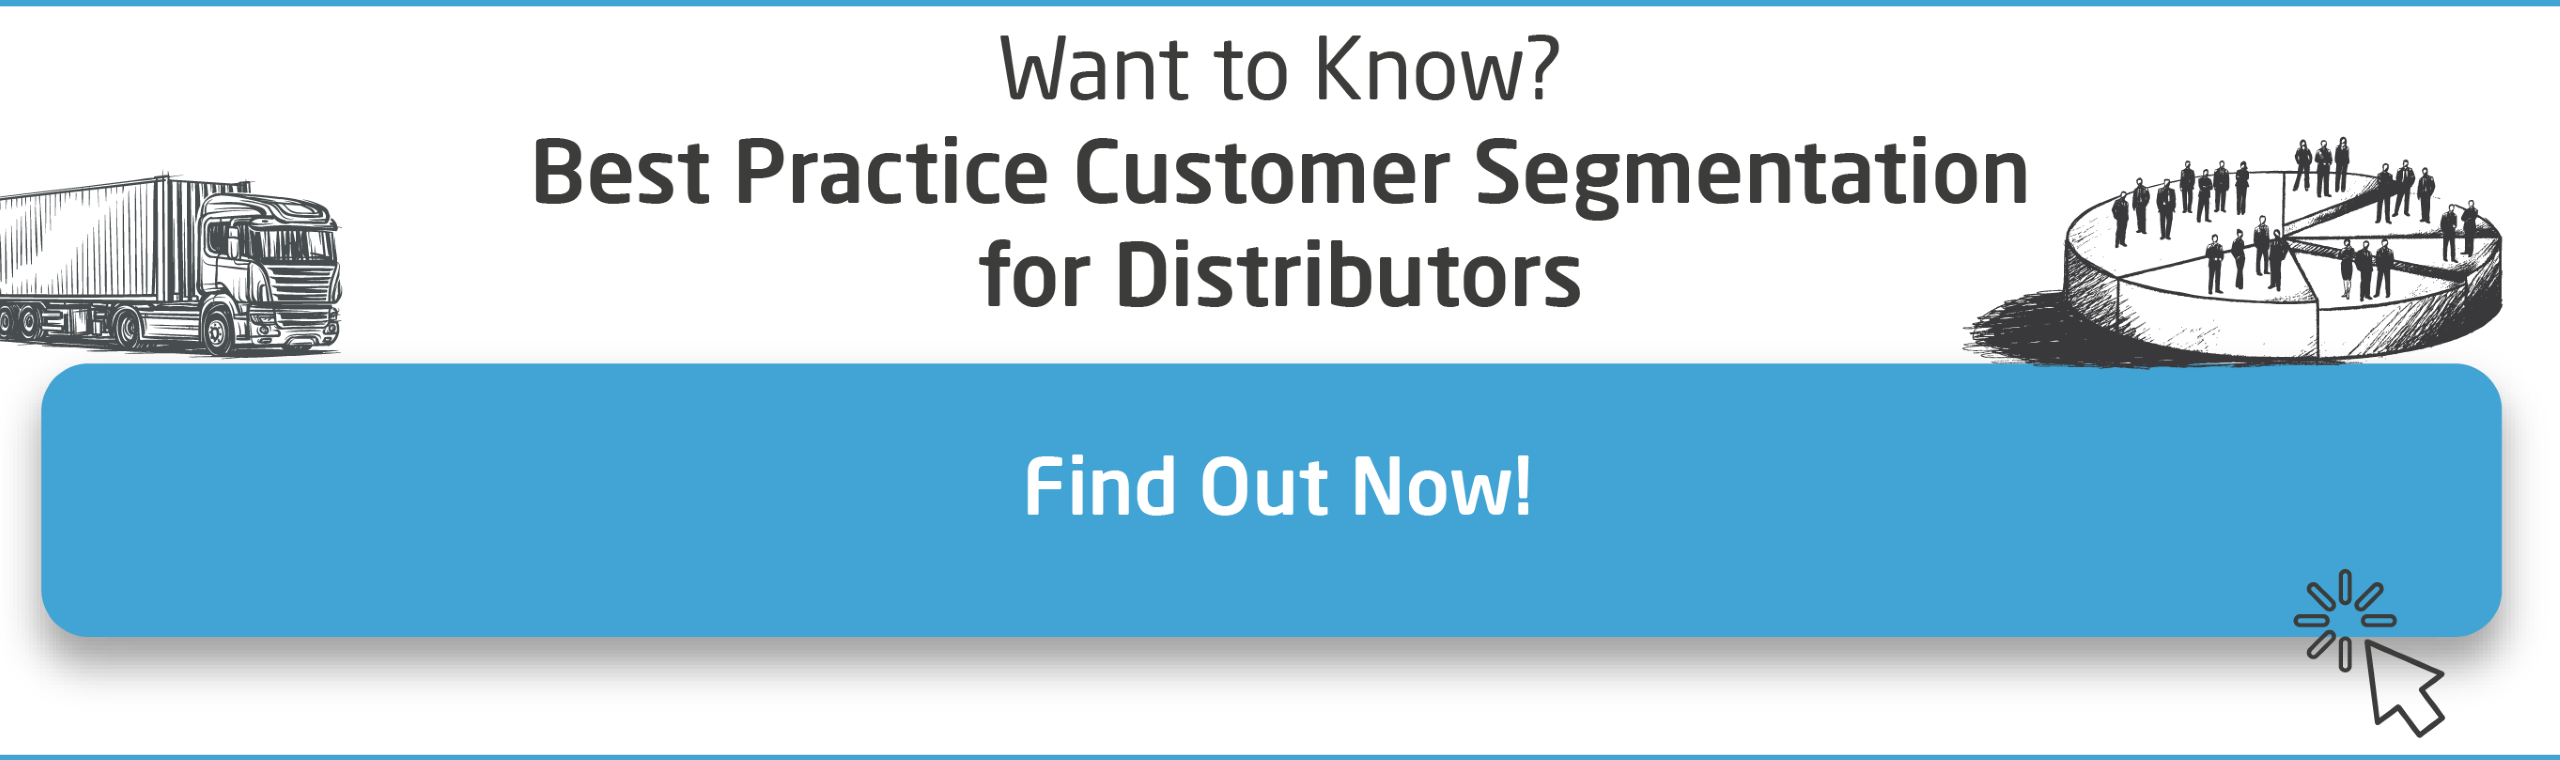 CTA-Best-Practice-Customer-Segmentation-for-Distributors